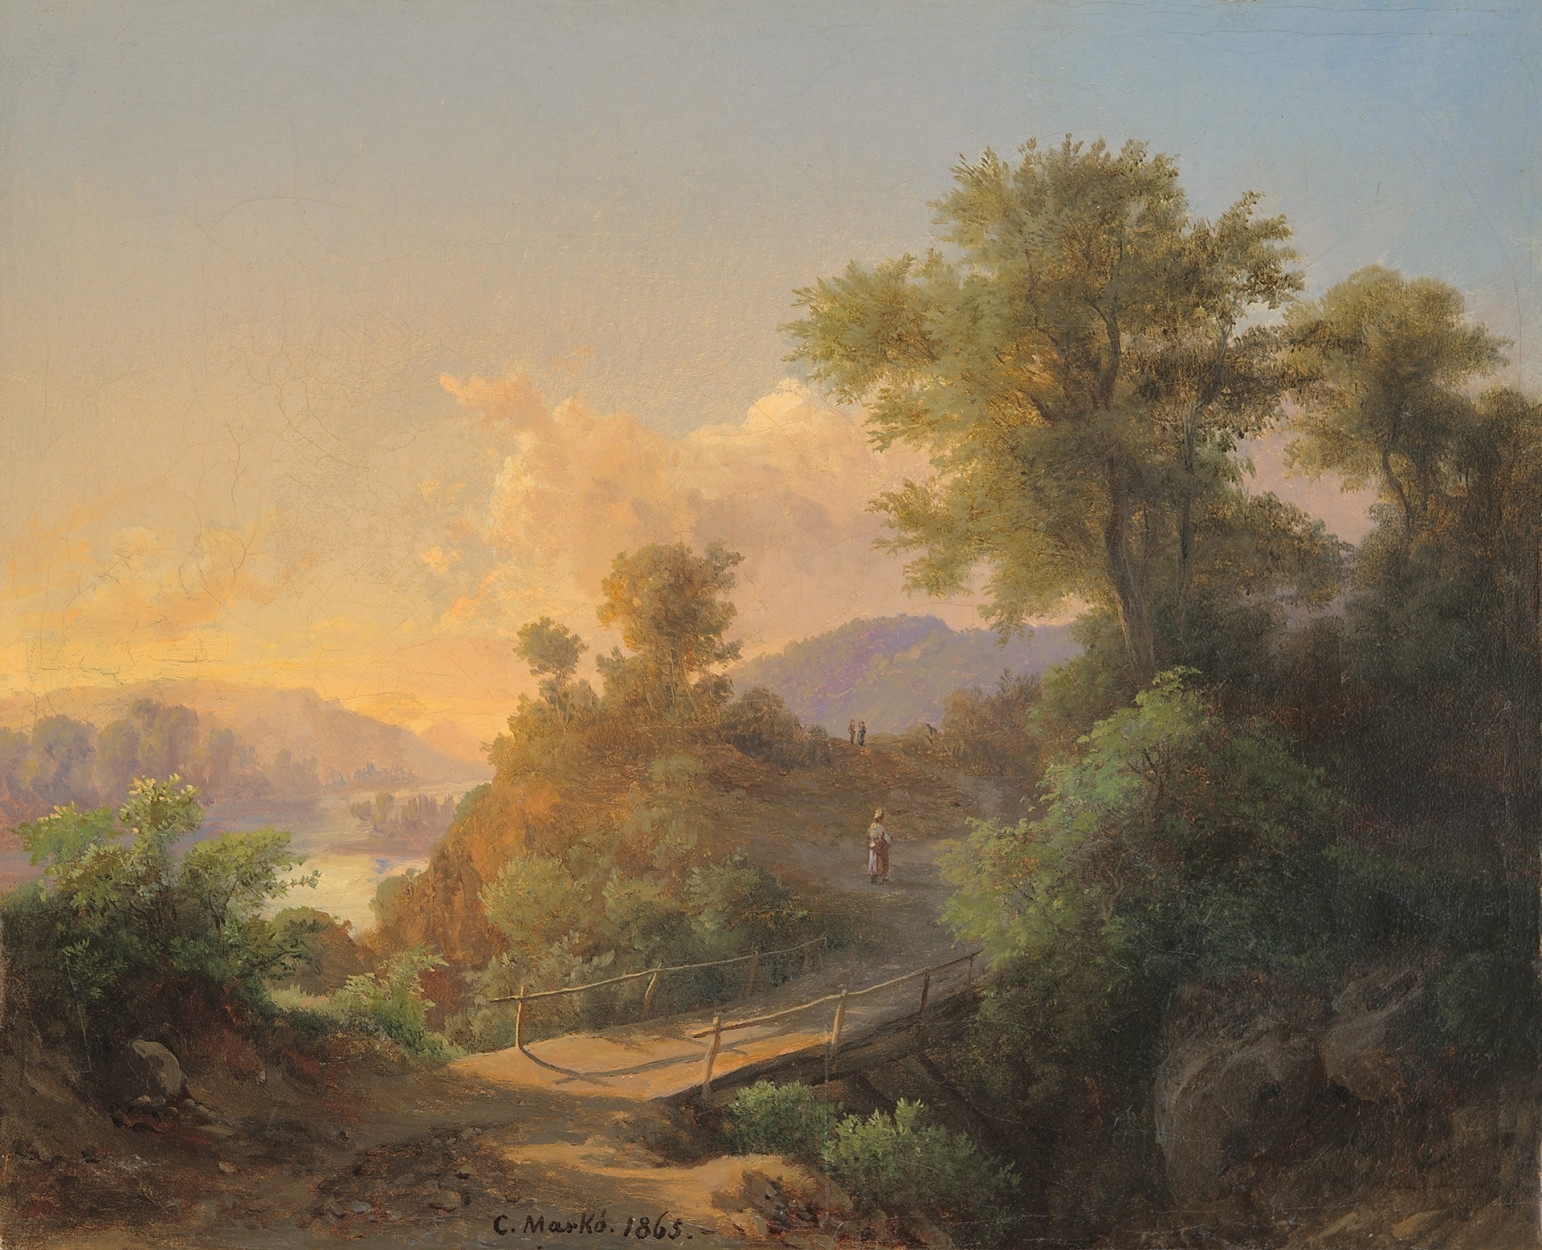 Markó Károly, Ifj. (1822 - 1891) Romantic landscape, 1865